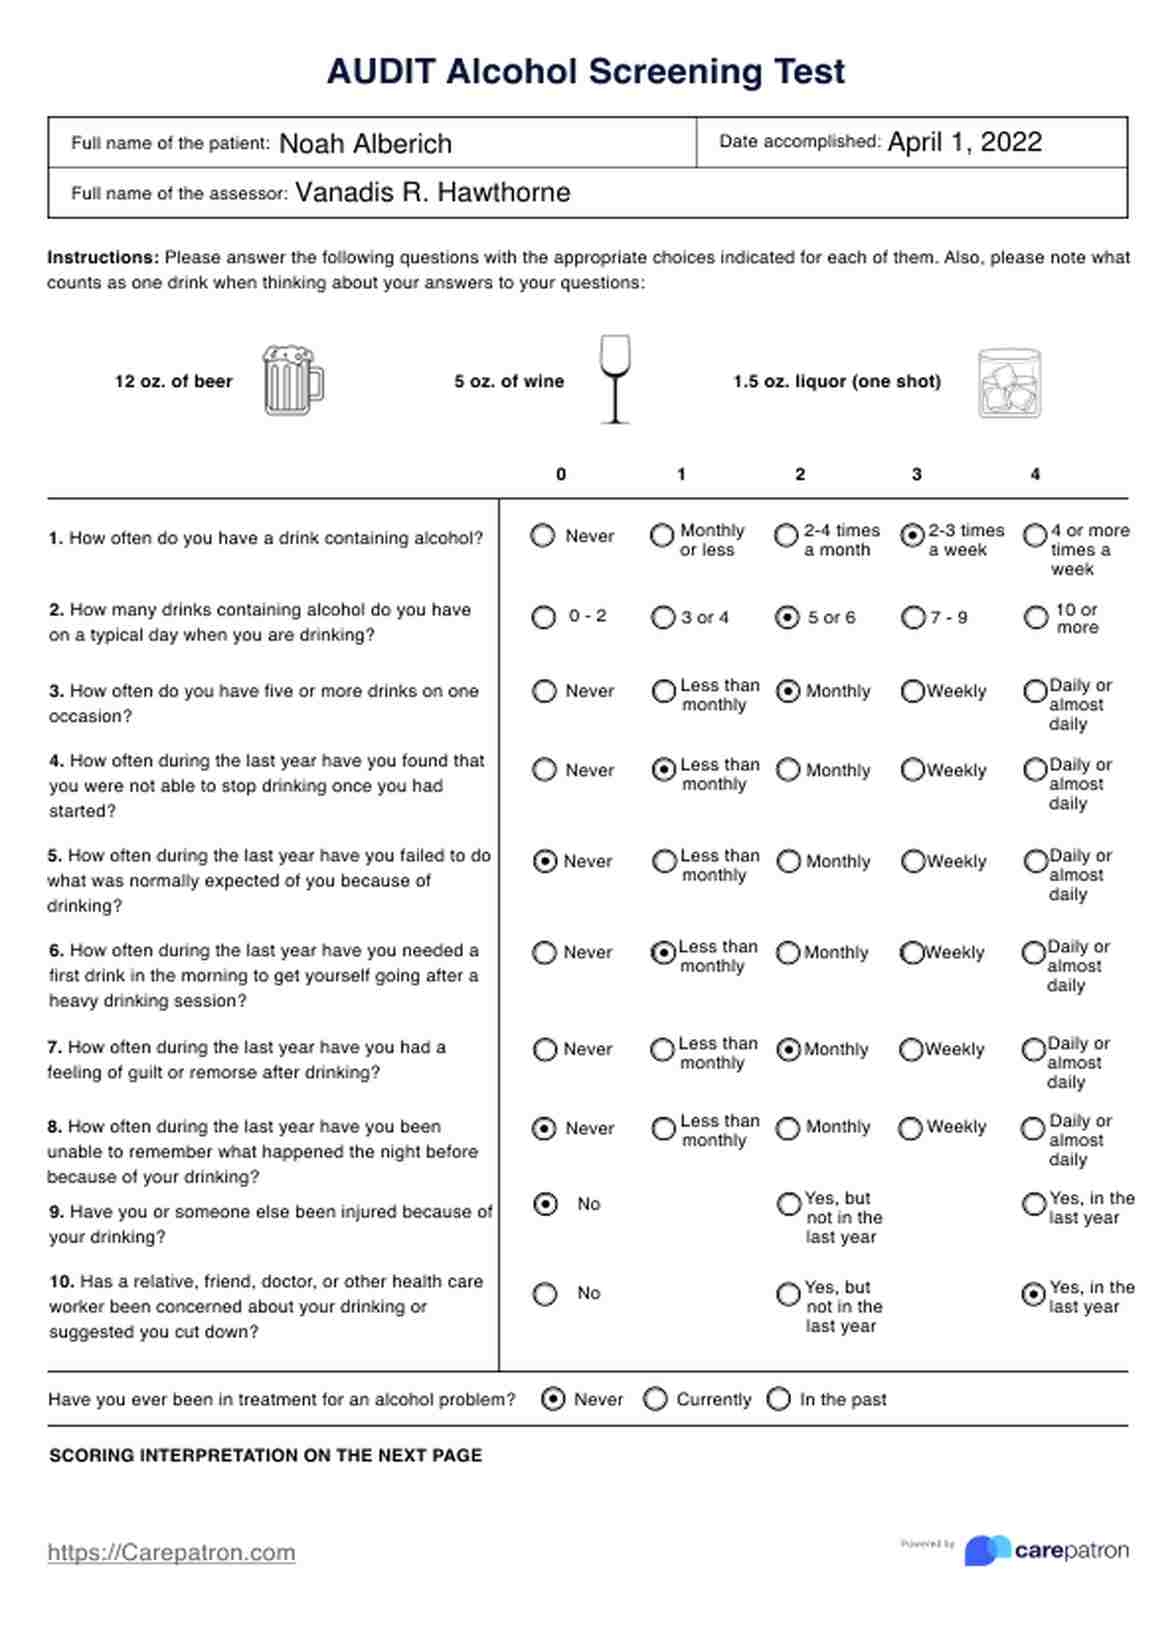 Alcohol Screening Test (AUDIT) PDF Example